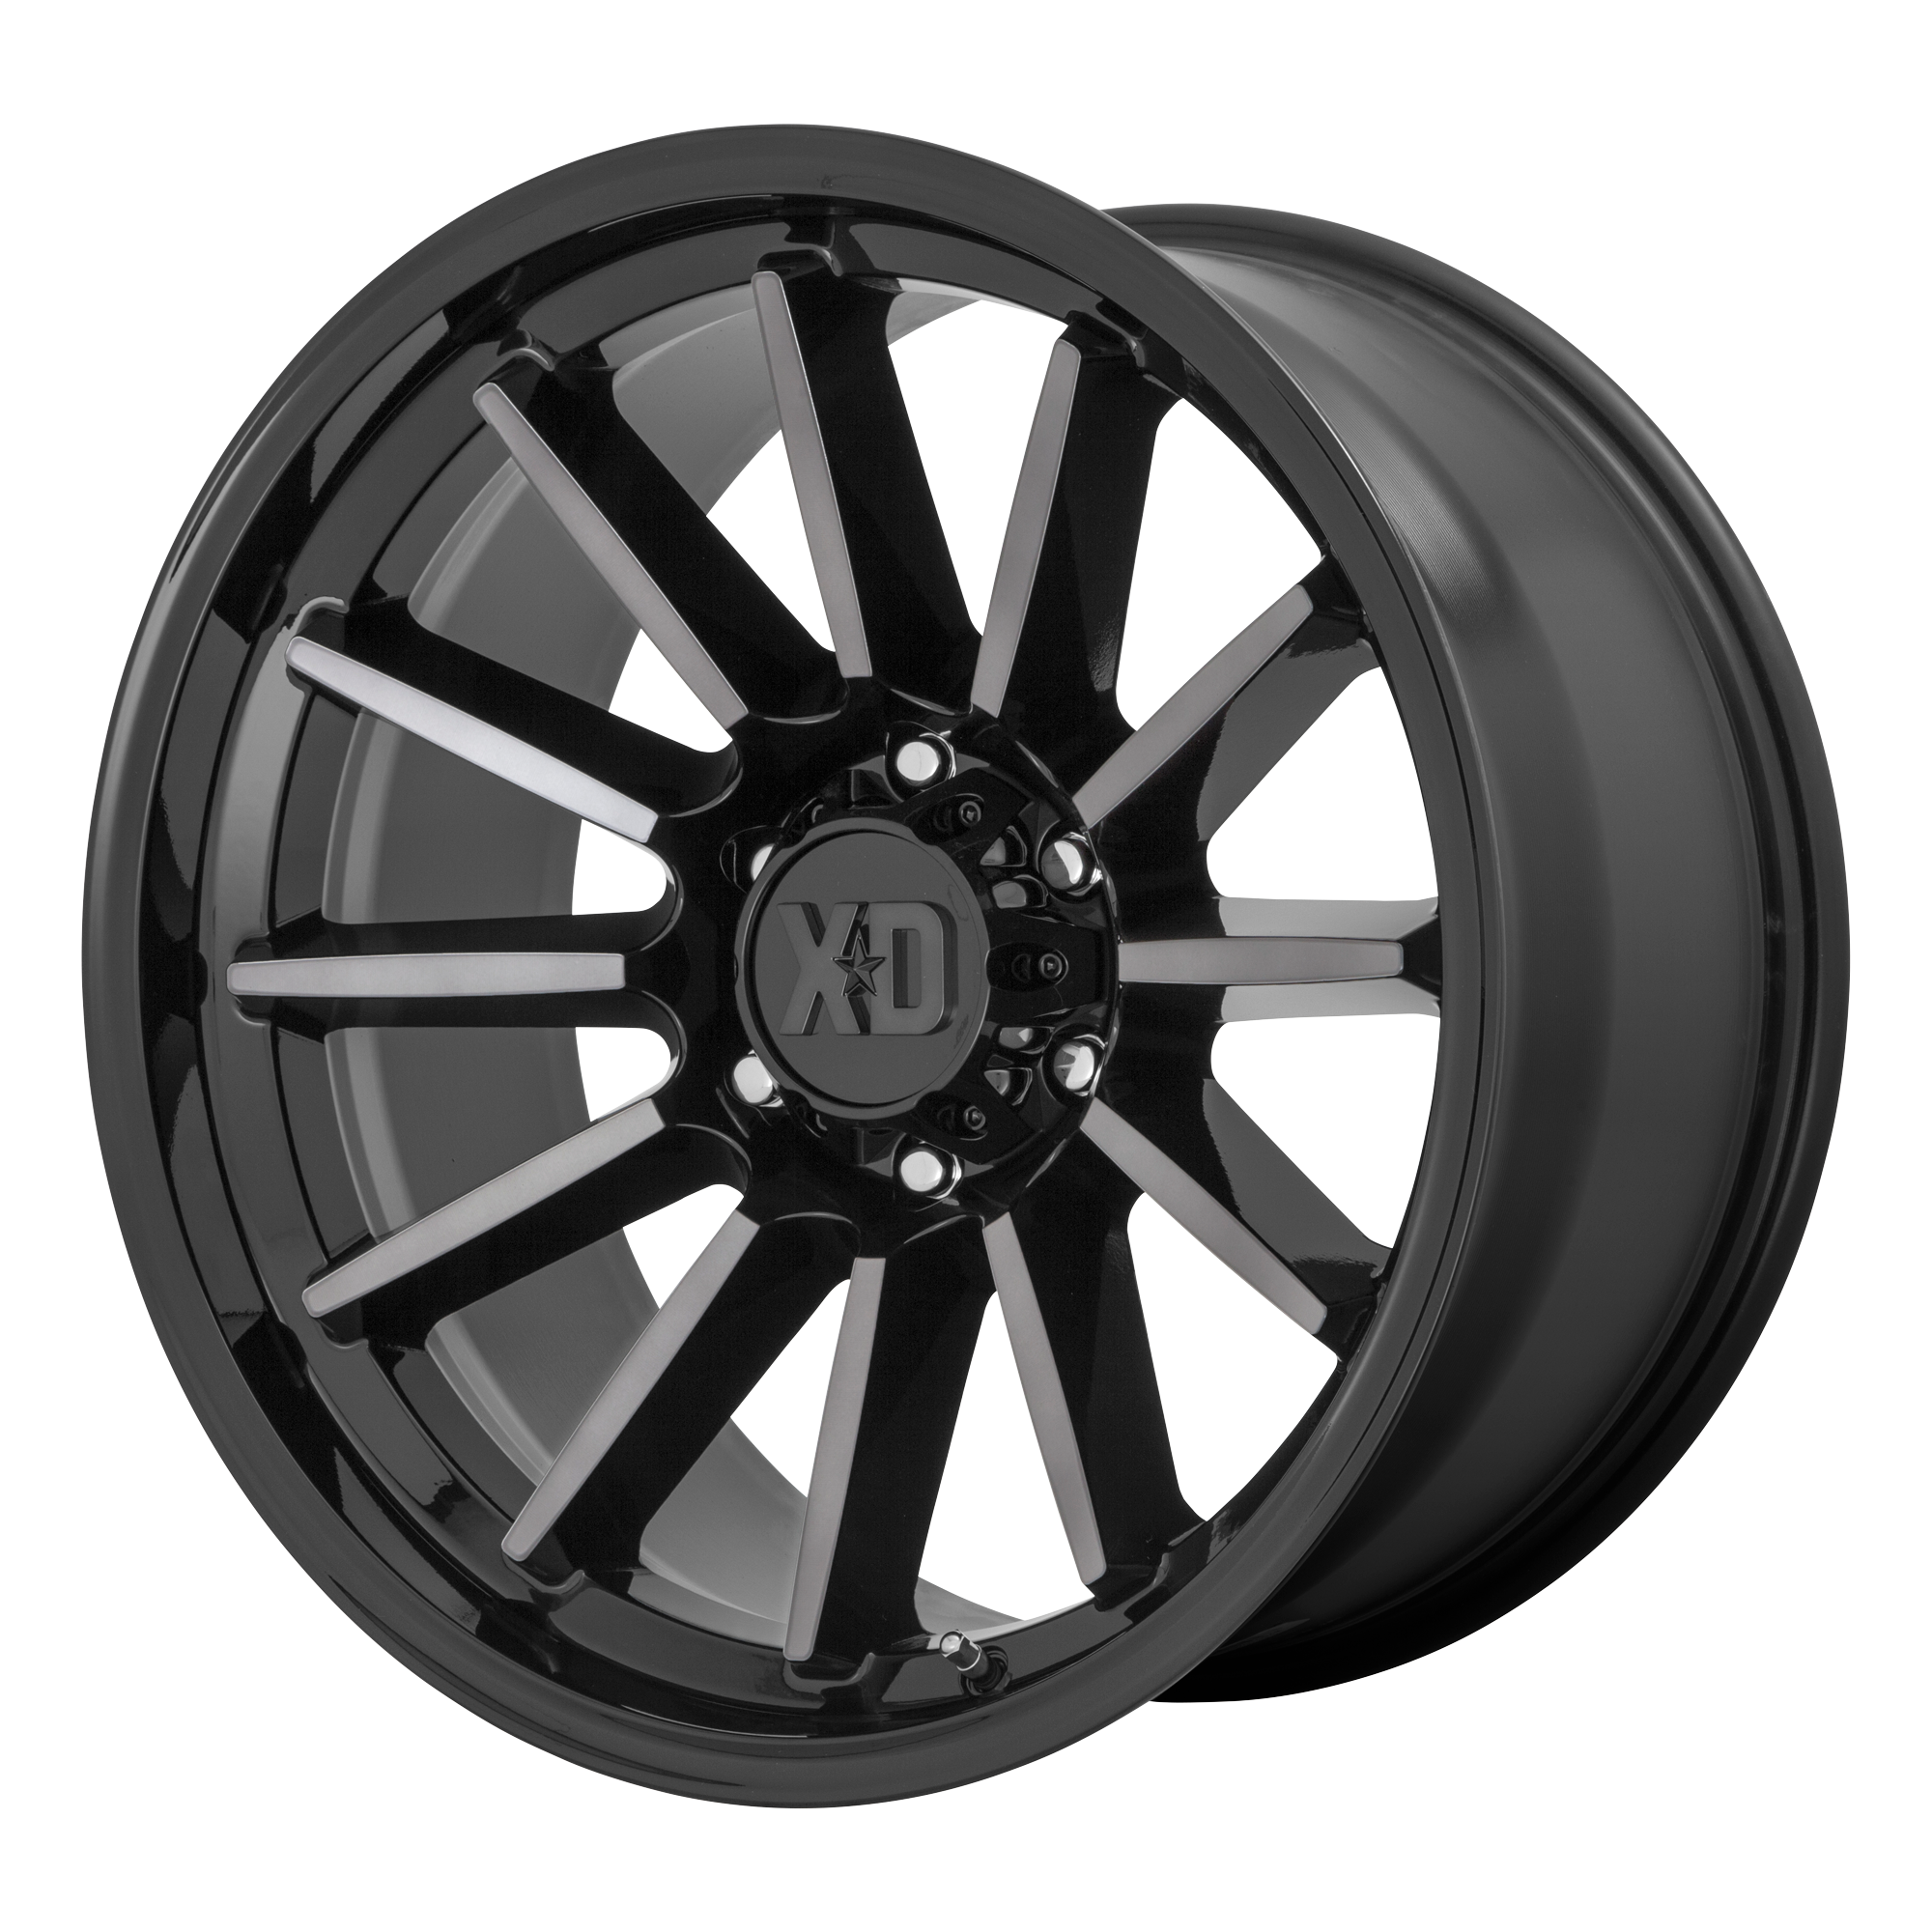 XD 22"x10" Non-Chrome Gloss Black Machined With Gray Tint Custom Wheel ARSWCWXD85522068418N